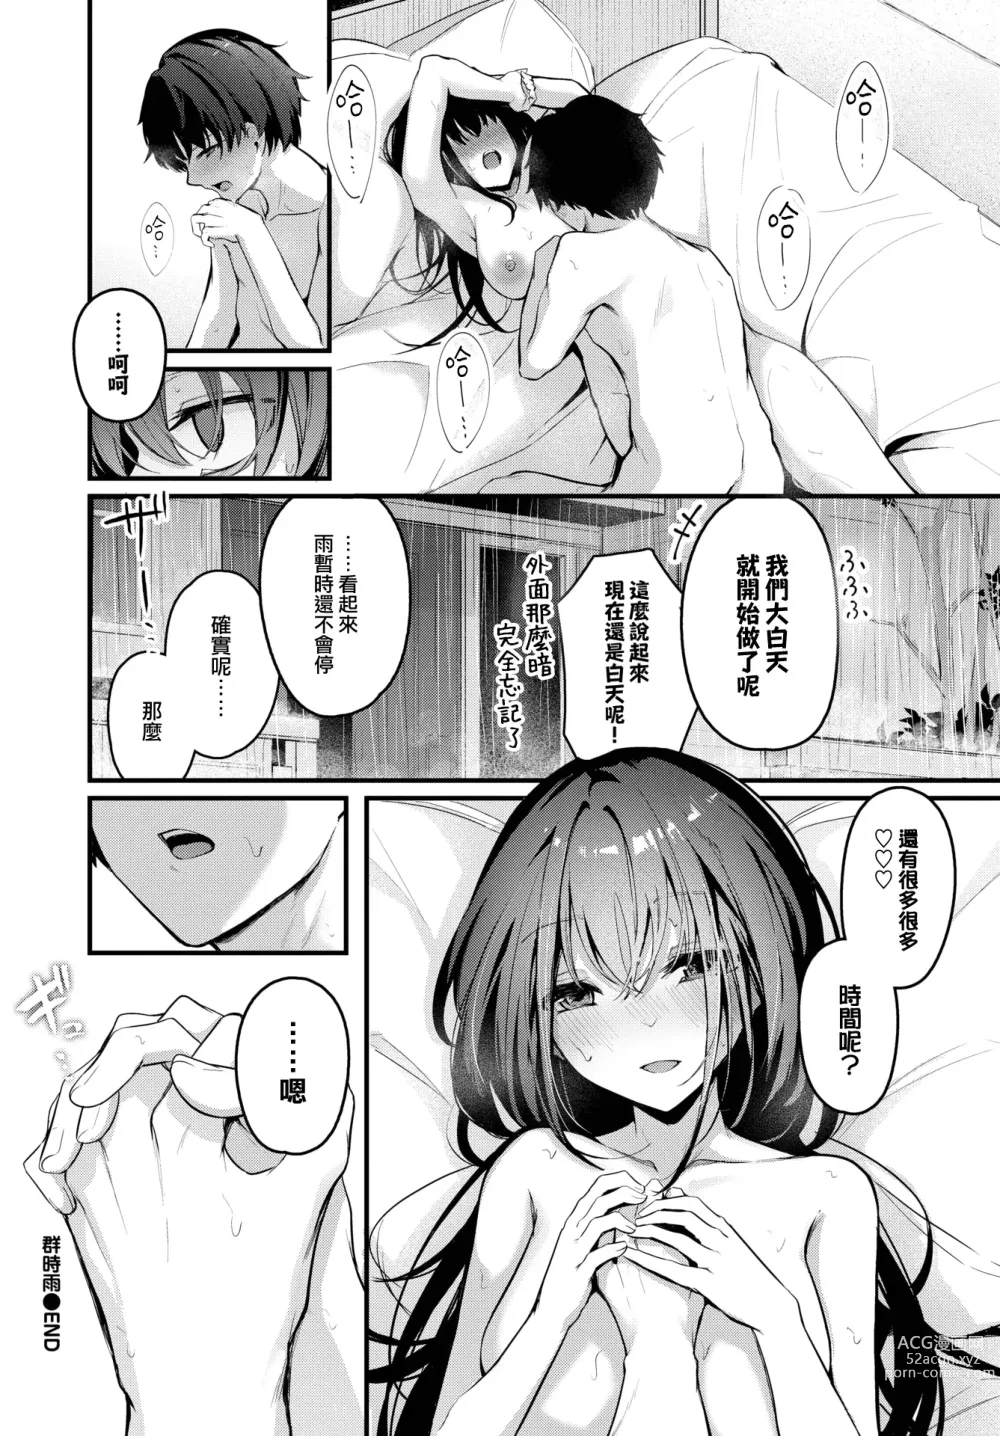 Page 21 of manga Murashigure